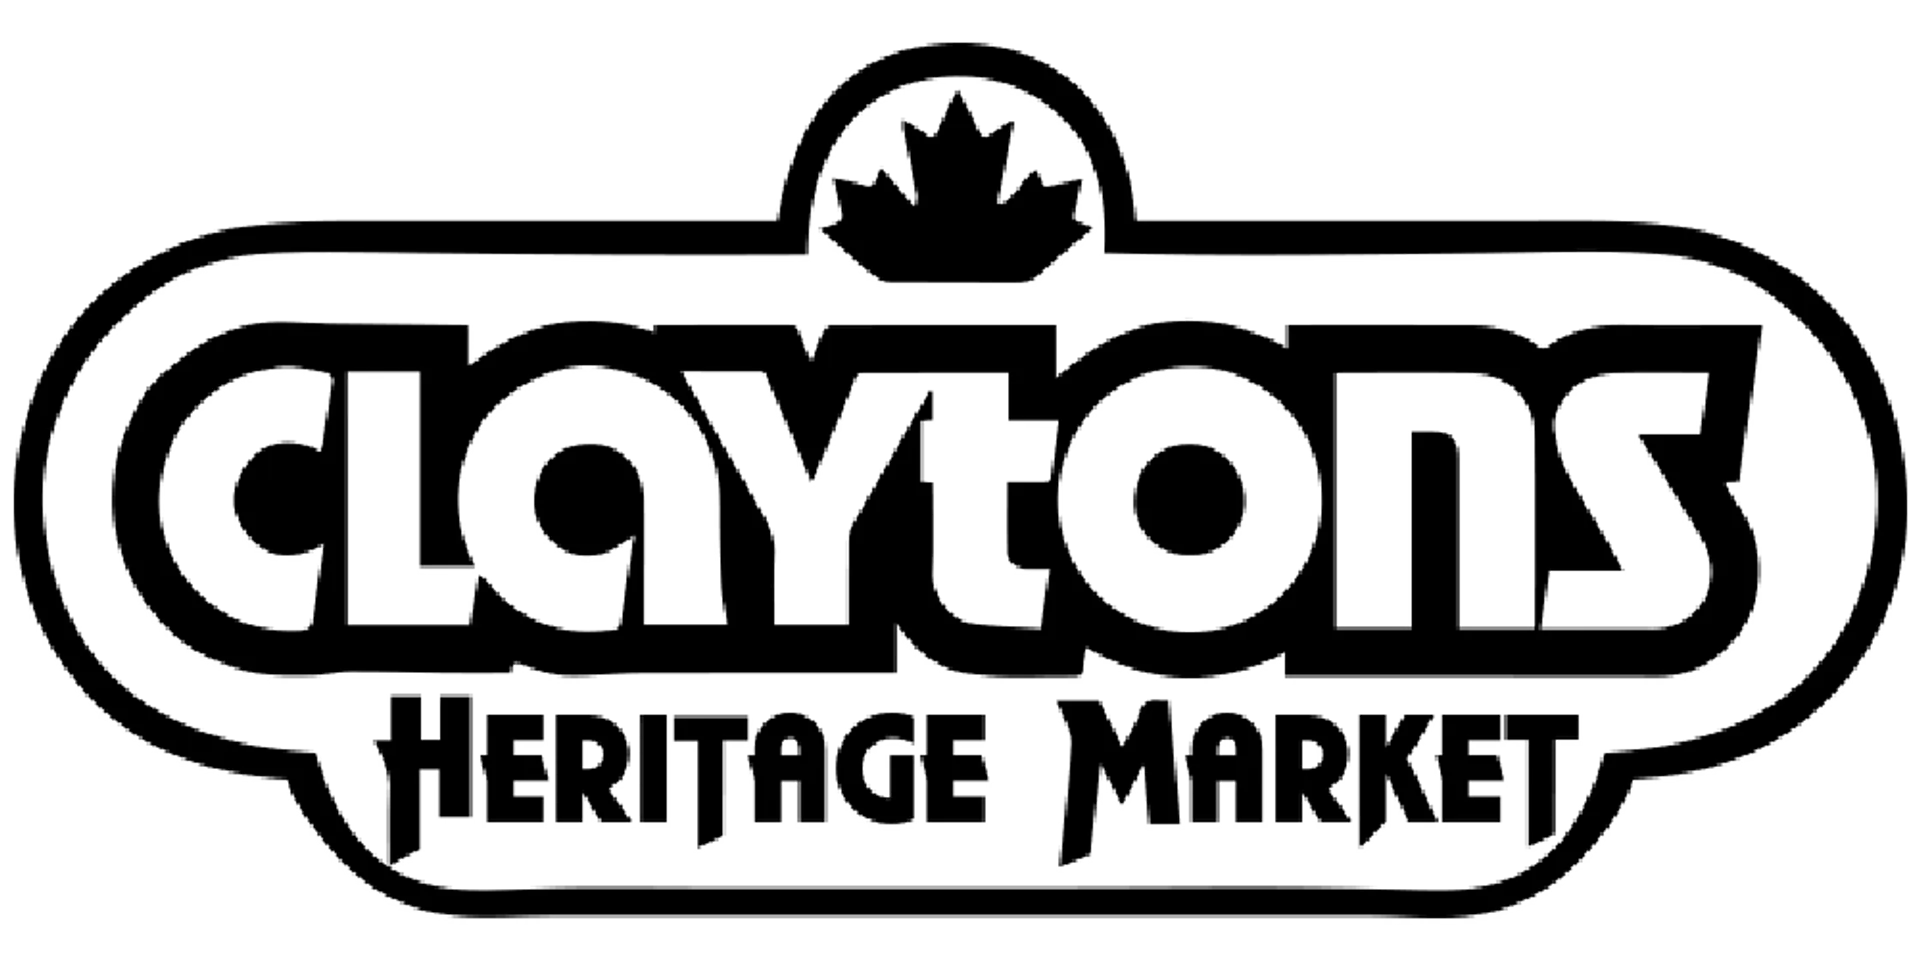 CLAYTONS HERITAGE MARKET logo